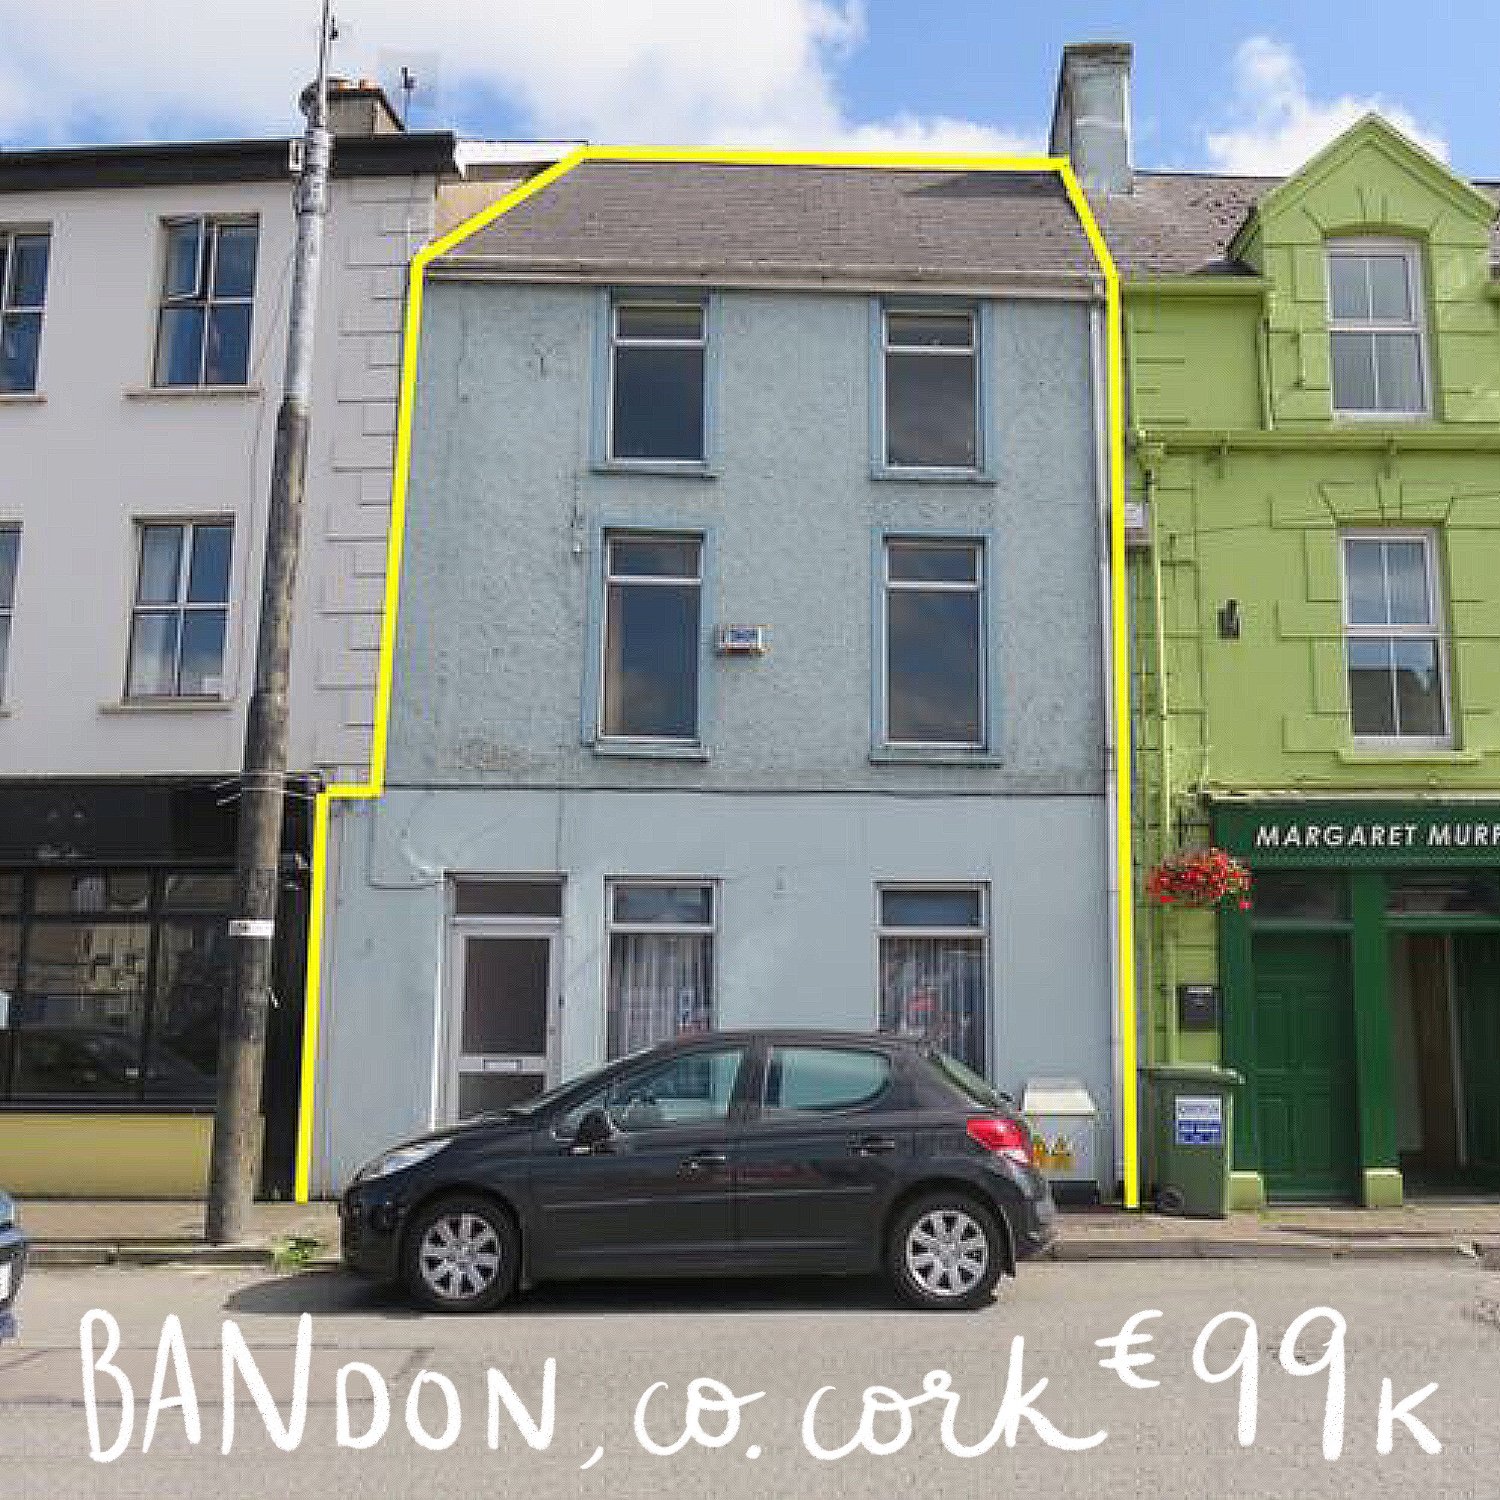 St. Patrick's Place, Bandon, Co. Cork. €99k